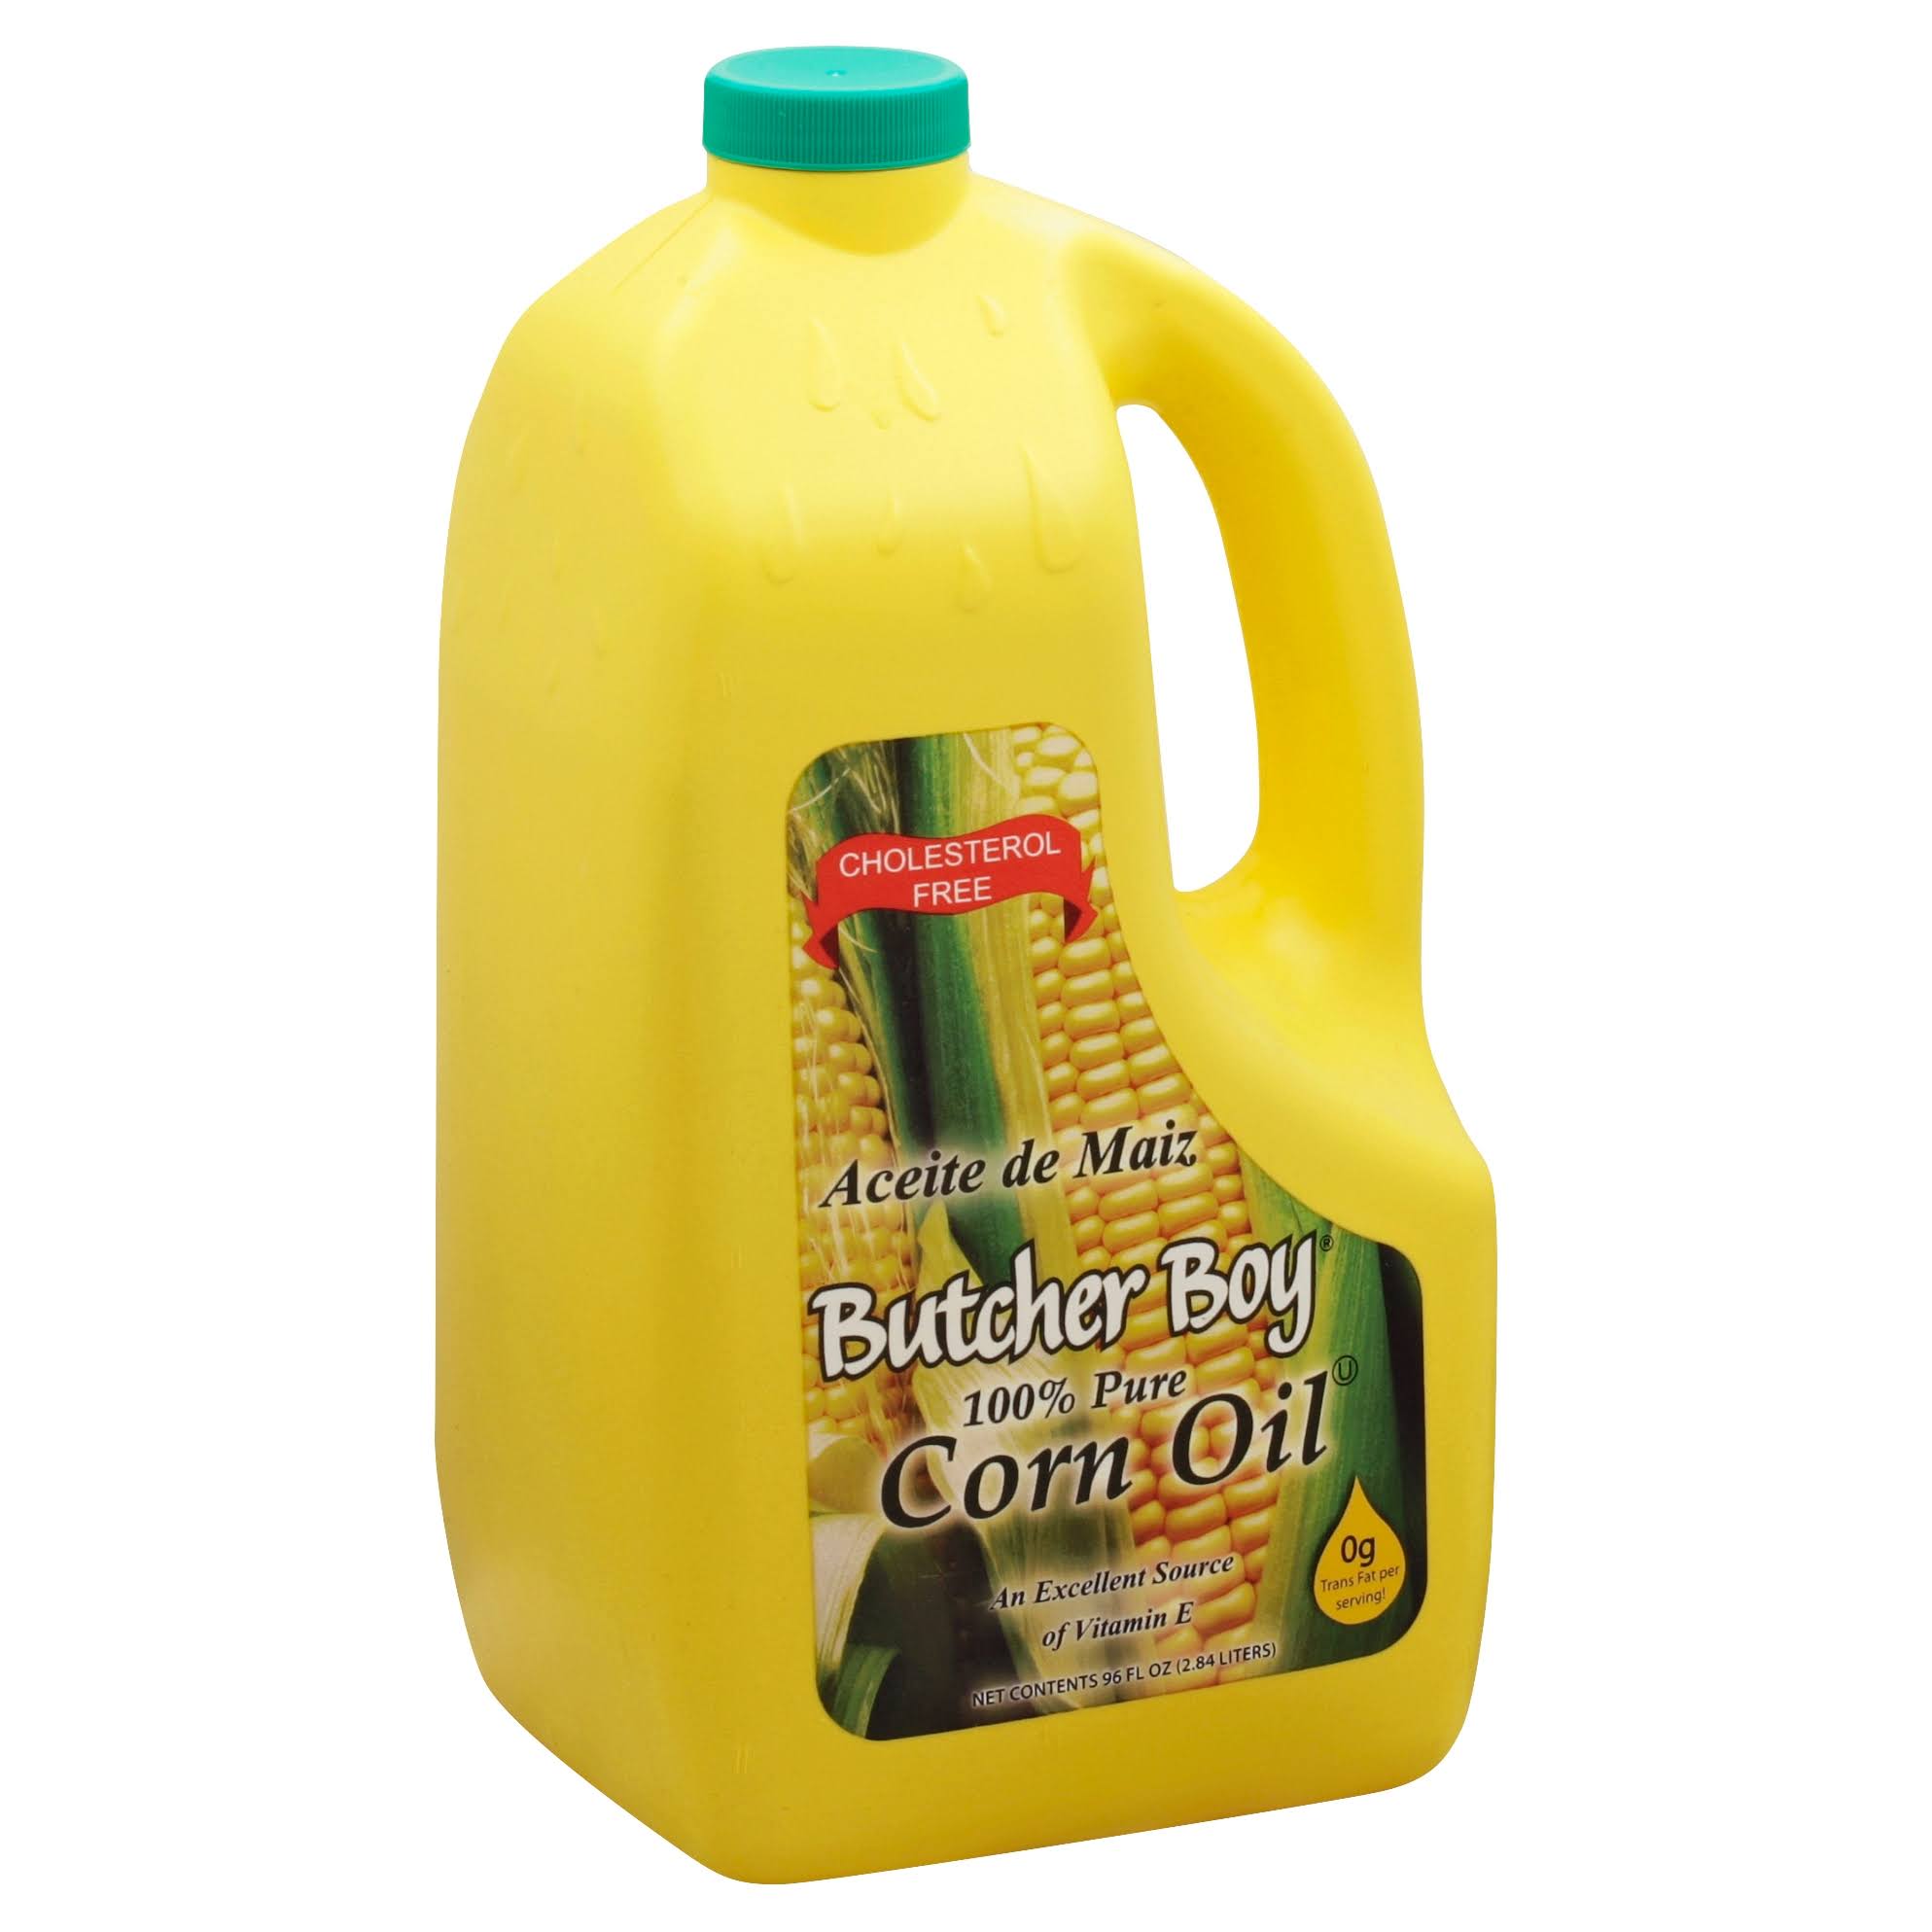 Butcher Boy Corn Oil, 100% Pure - 96 fl oz